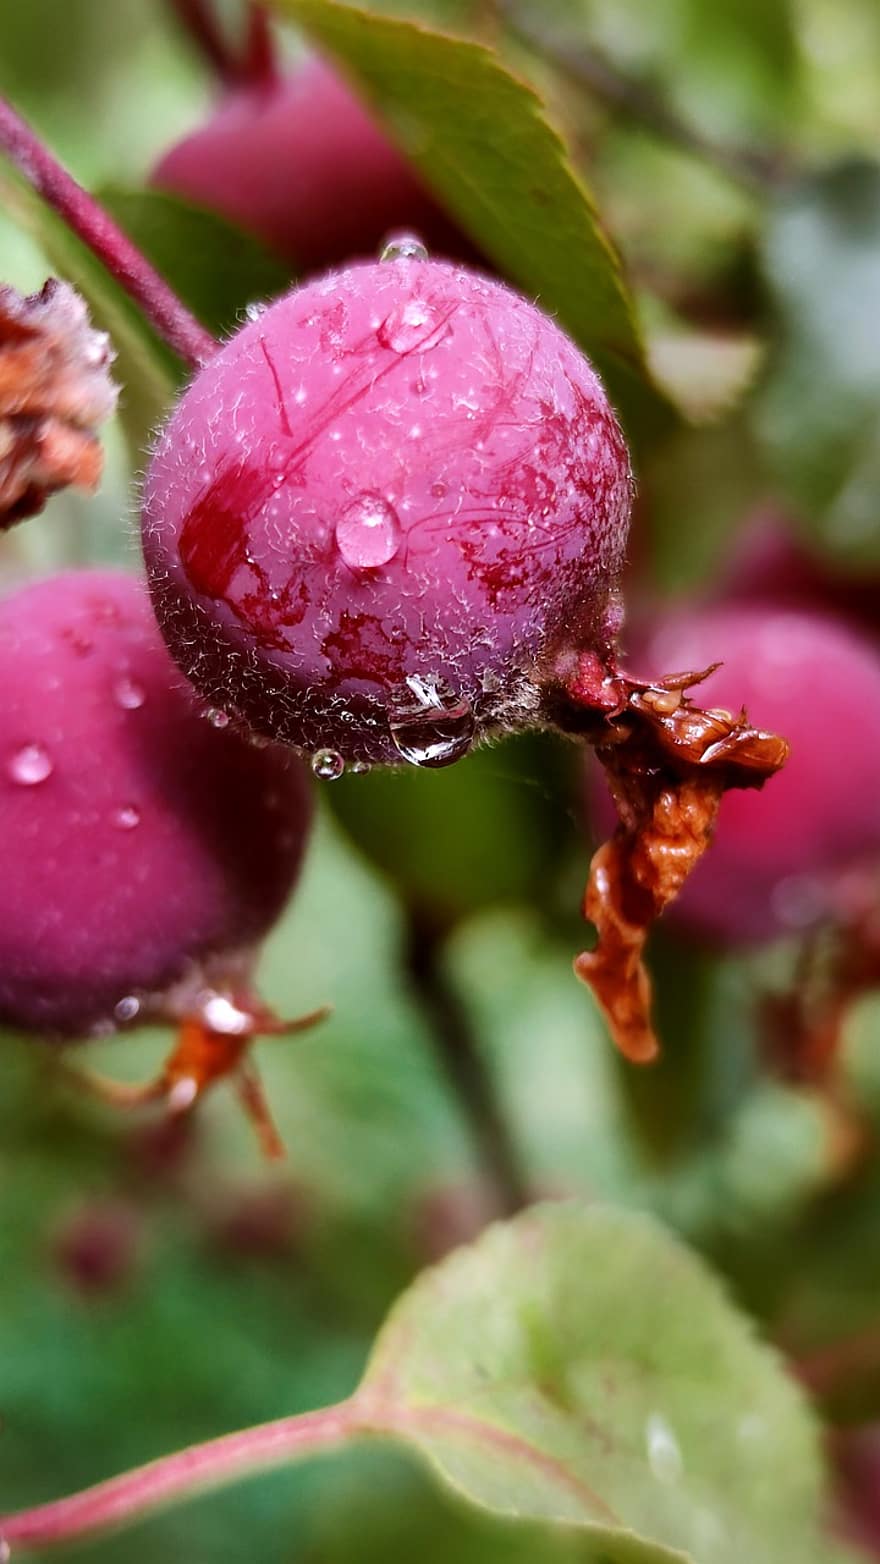 rosehips, ผลเบอร์รี่, dewdrops, ธรรมชาติ